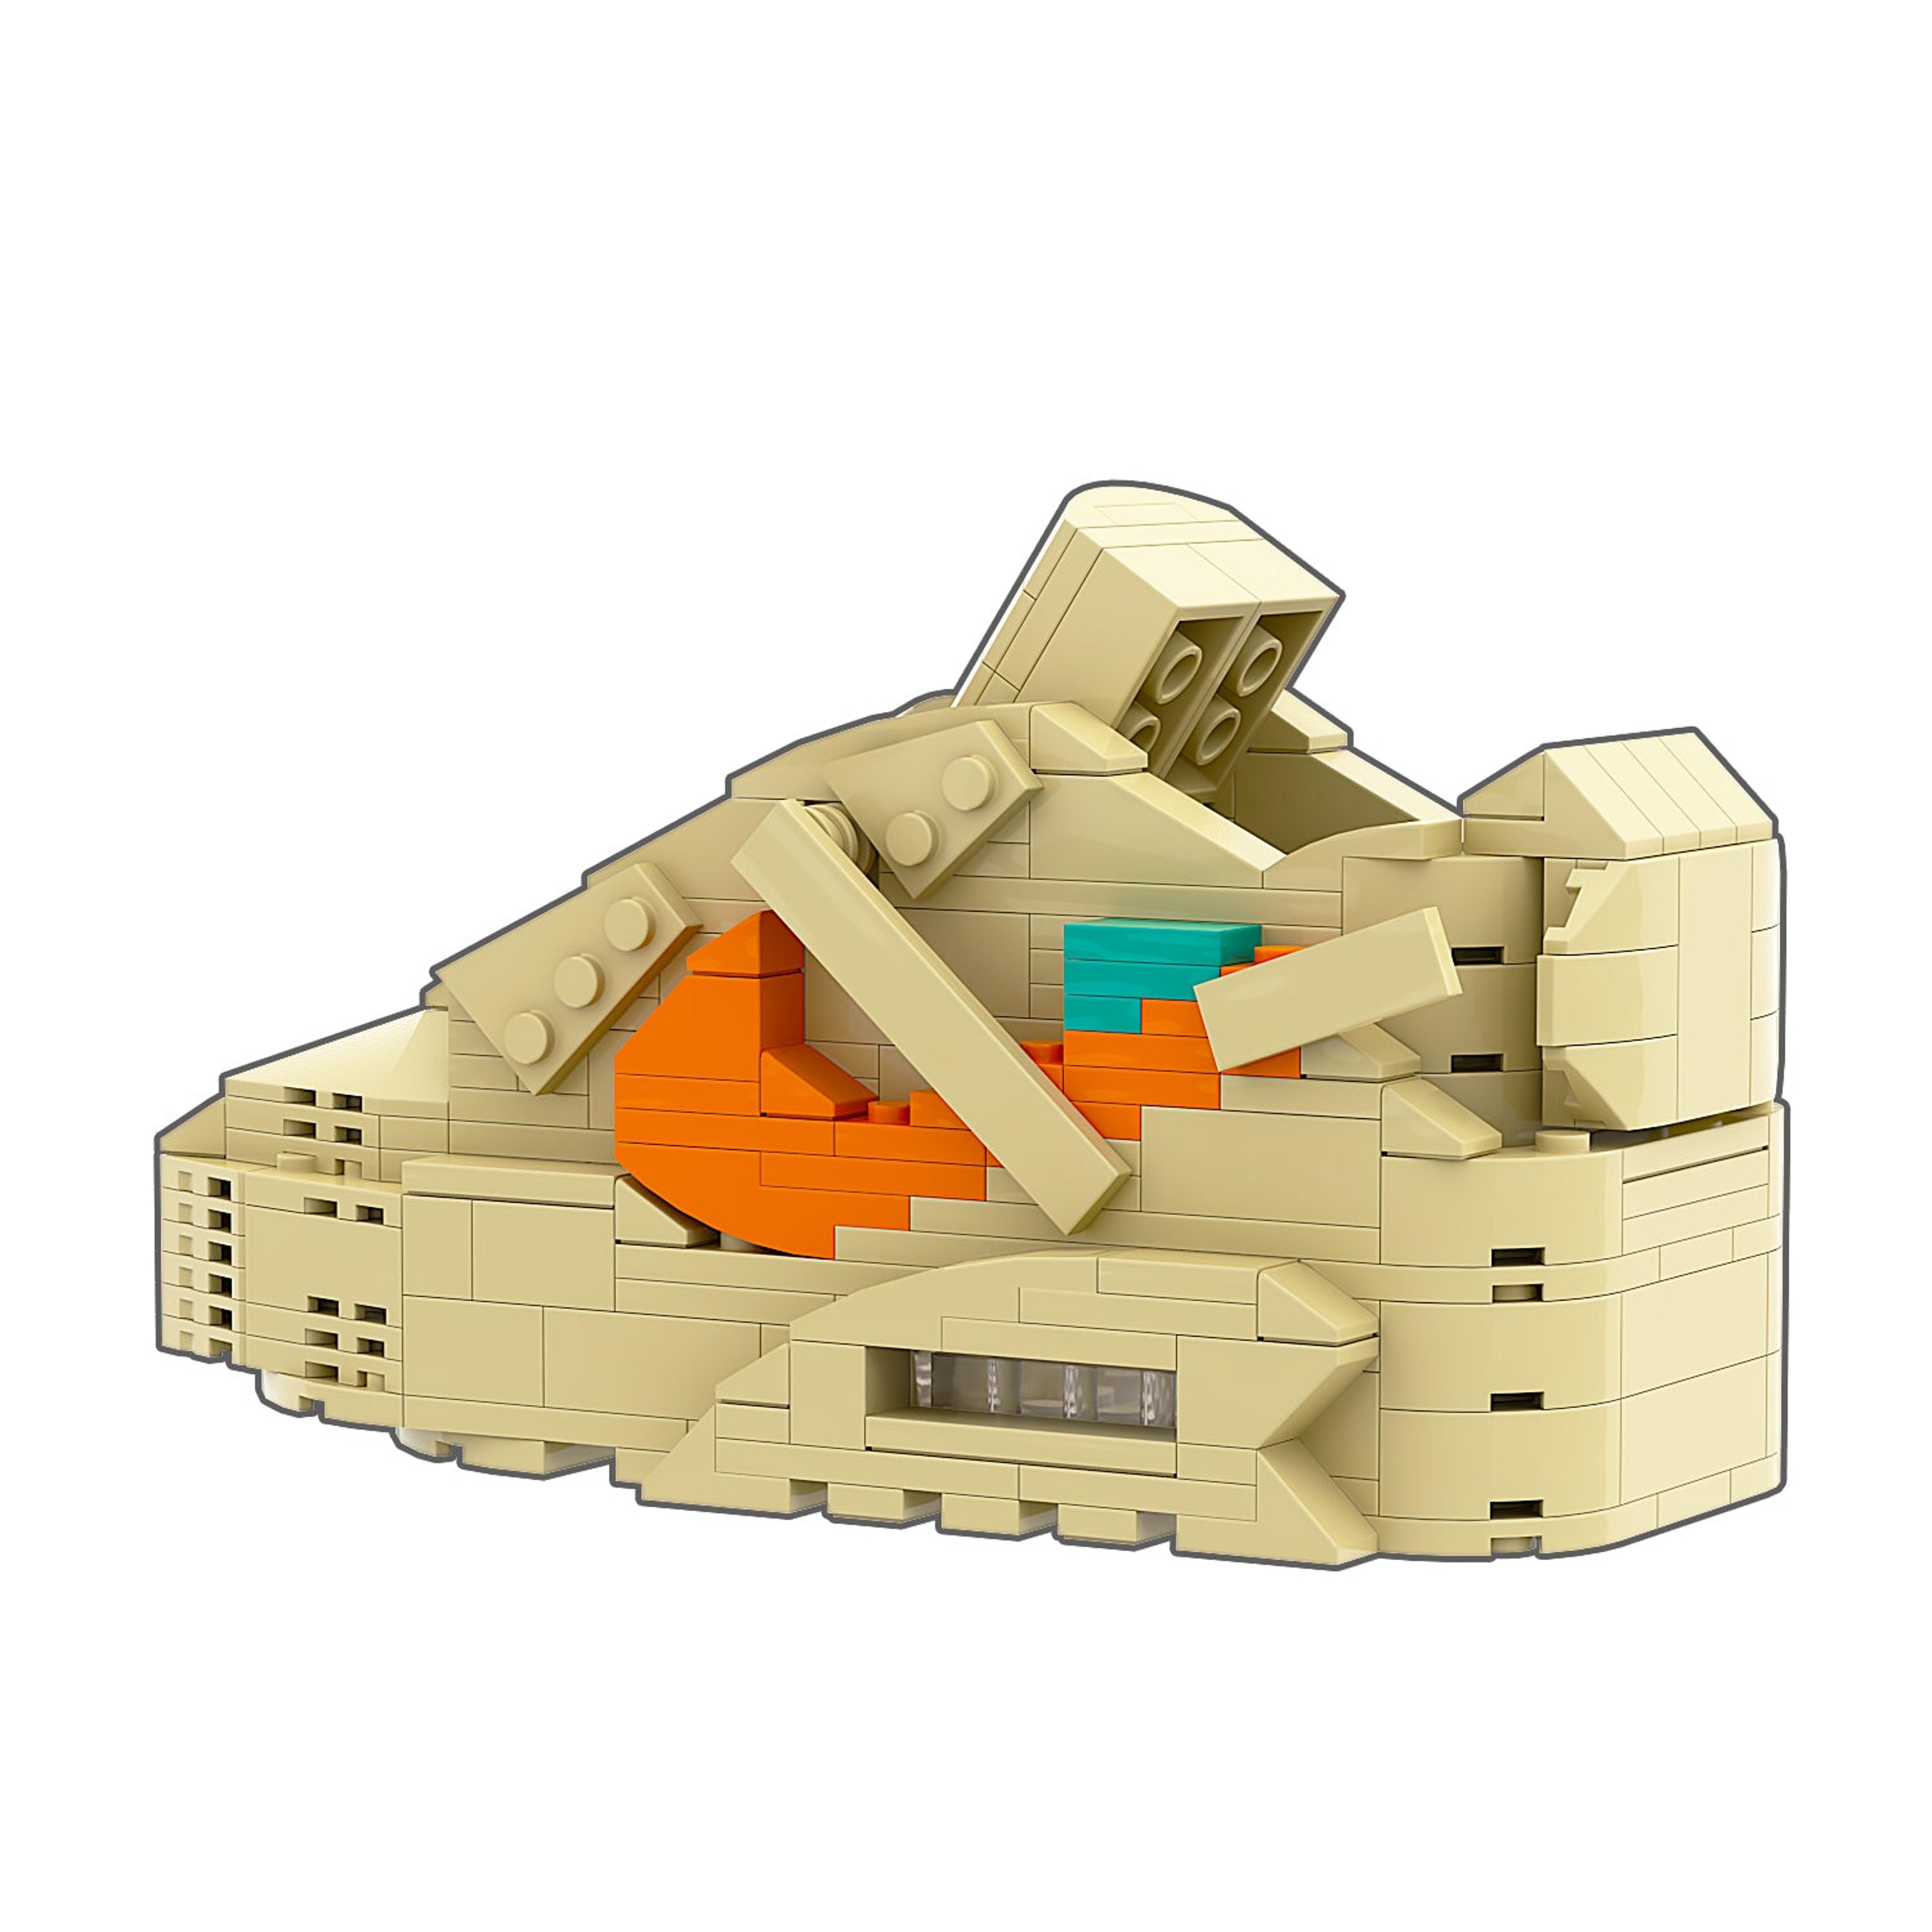 Alternate View 3 of REGULAR Air Max 90 "Desert Ore" Sneaker Bricks with Mini Figure